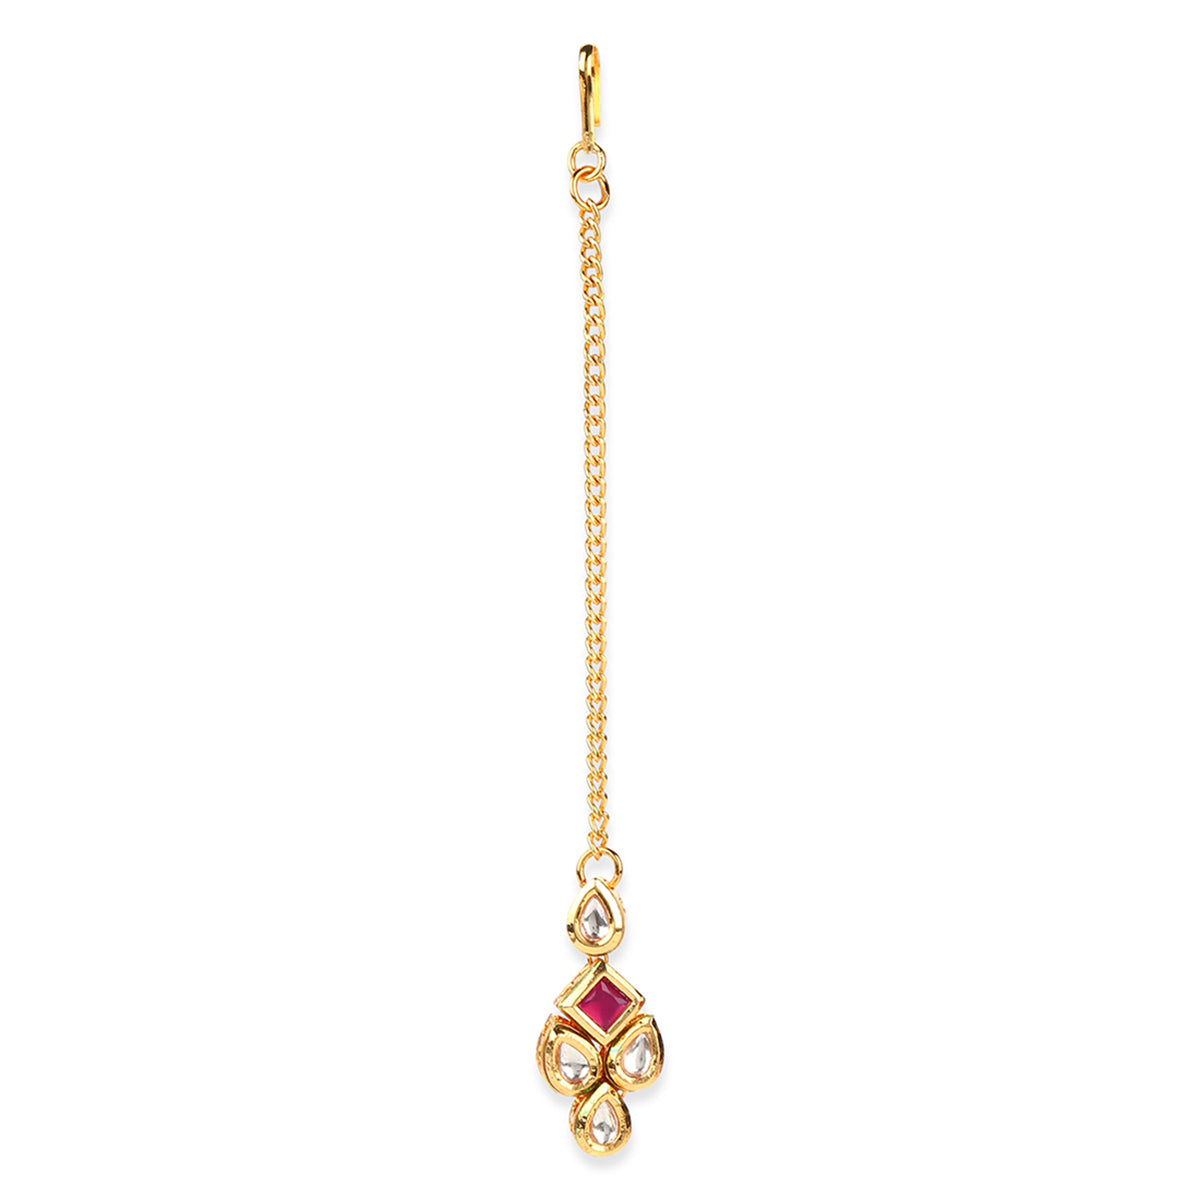 Kundan Elegance Gold Plated Square Stones Necklace Set